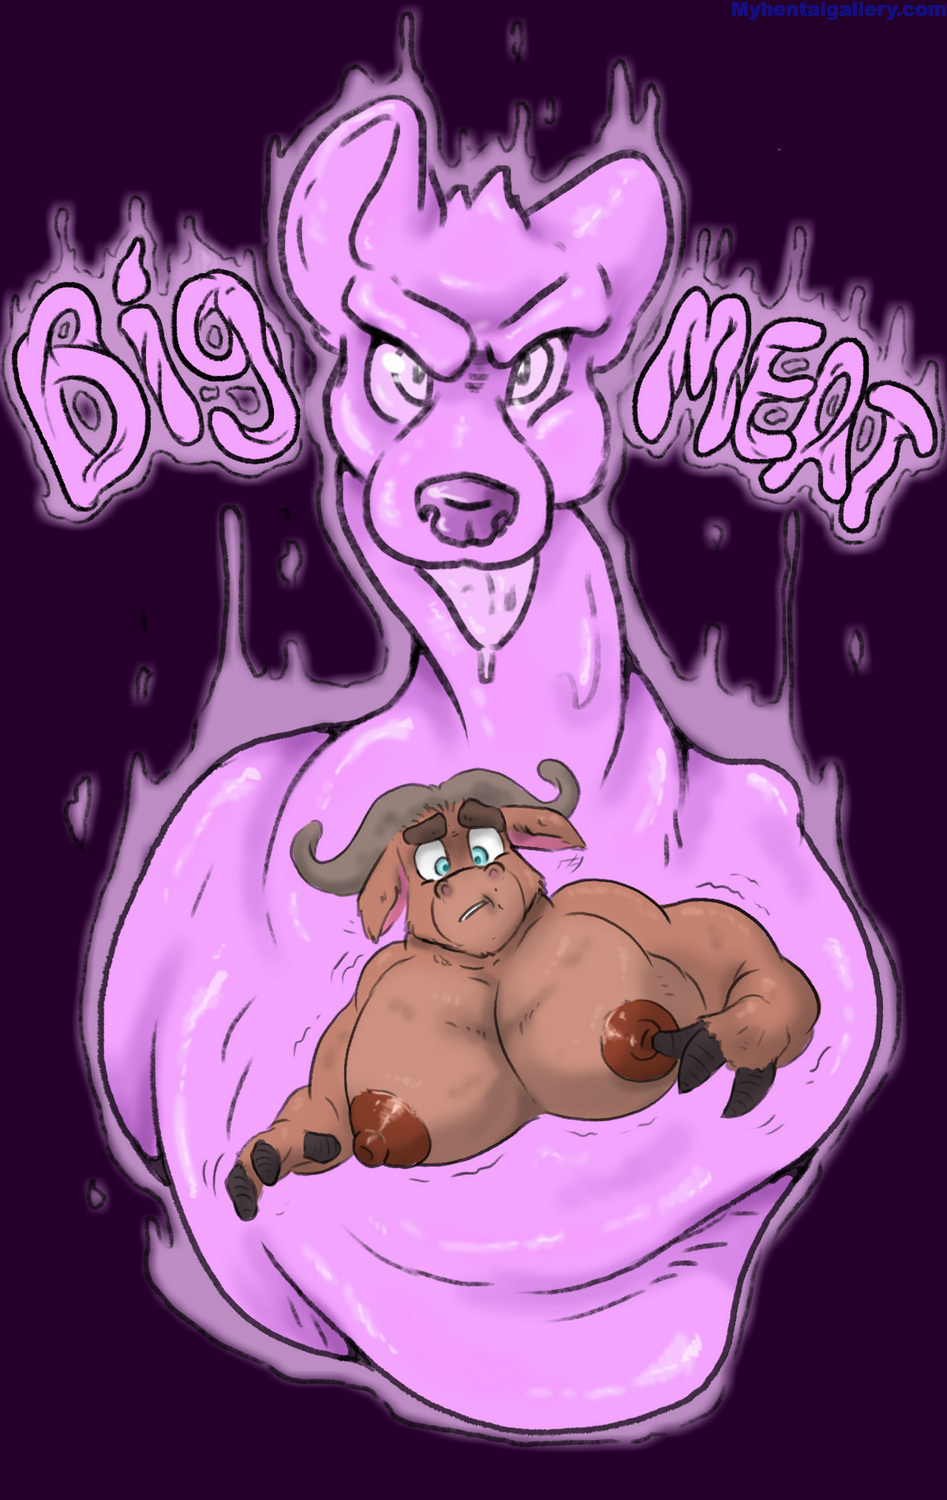 Big Meat